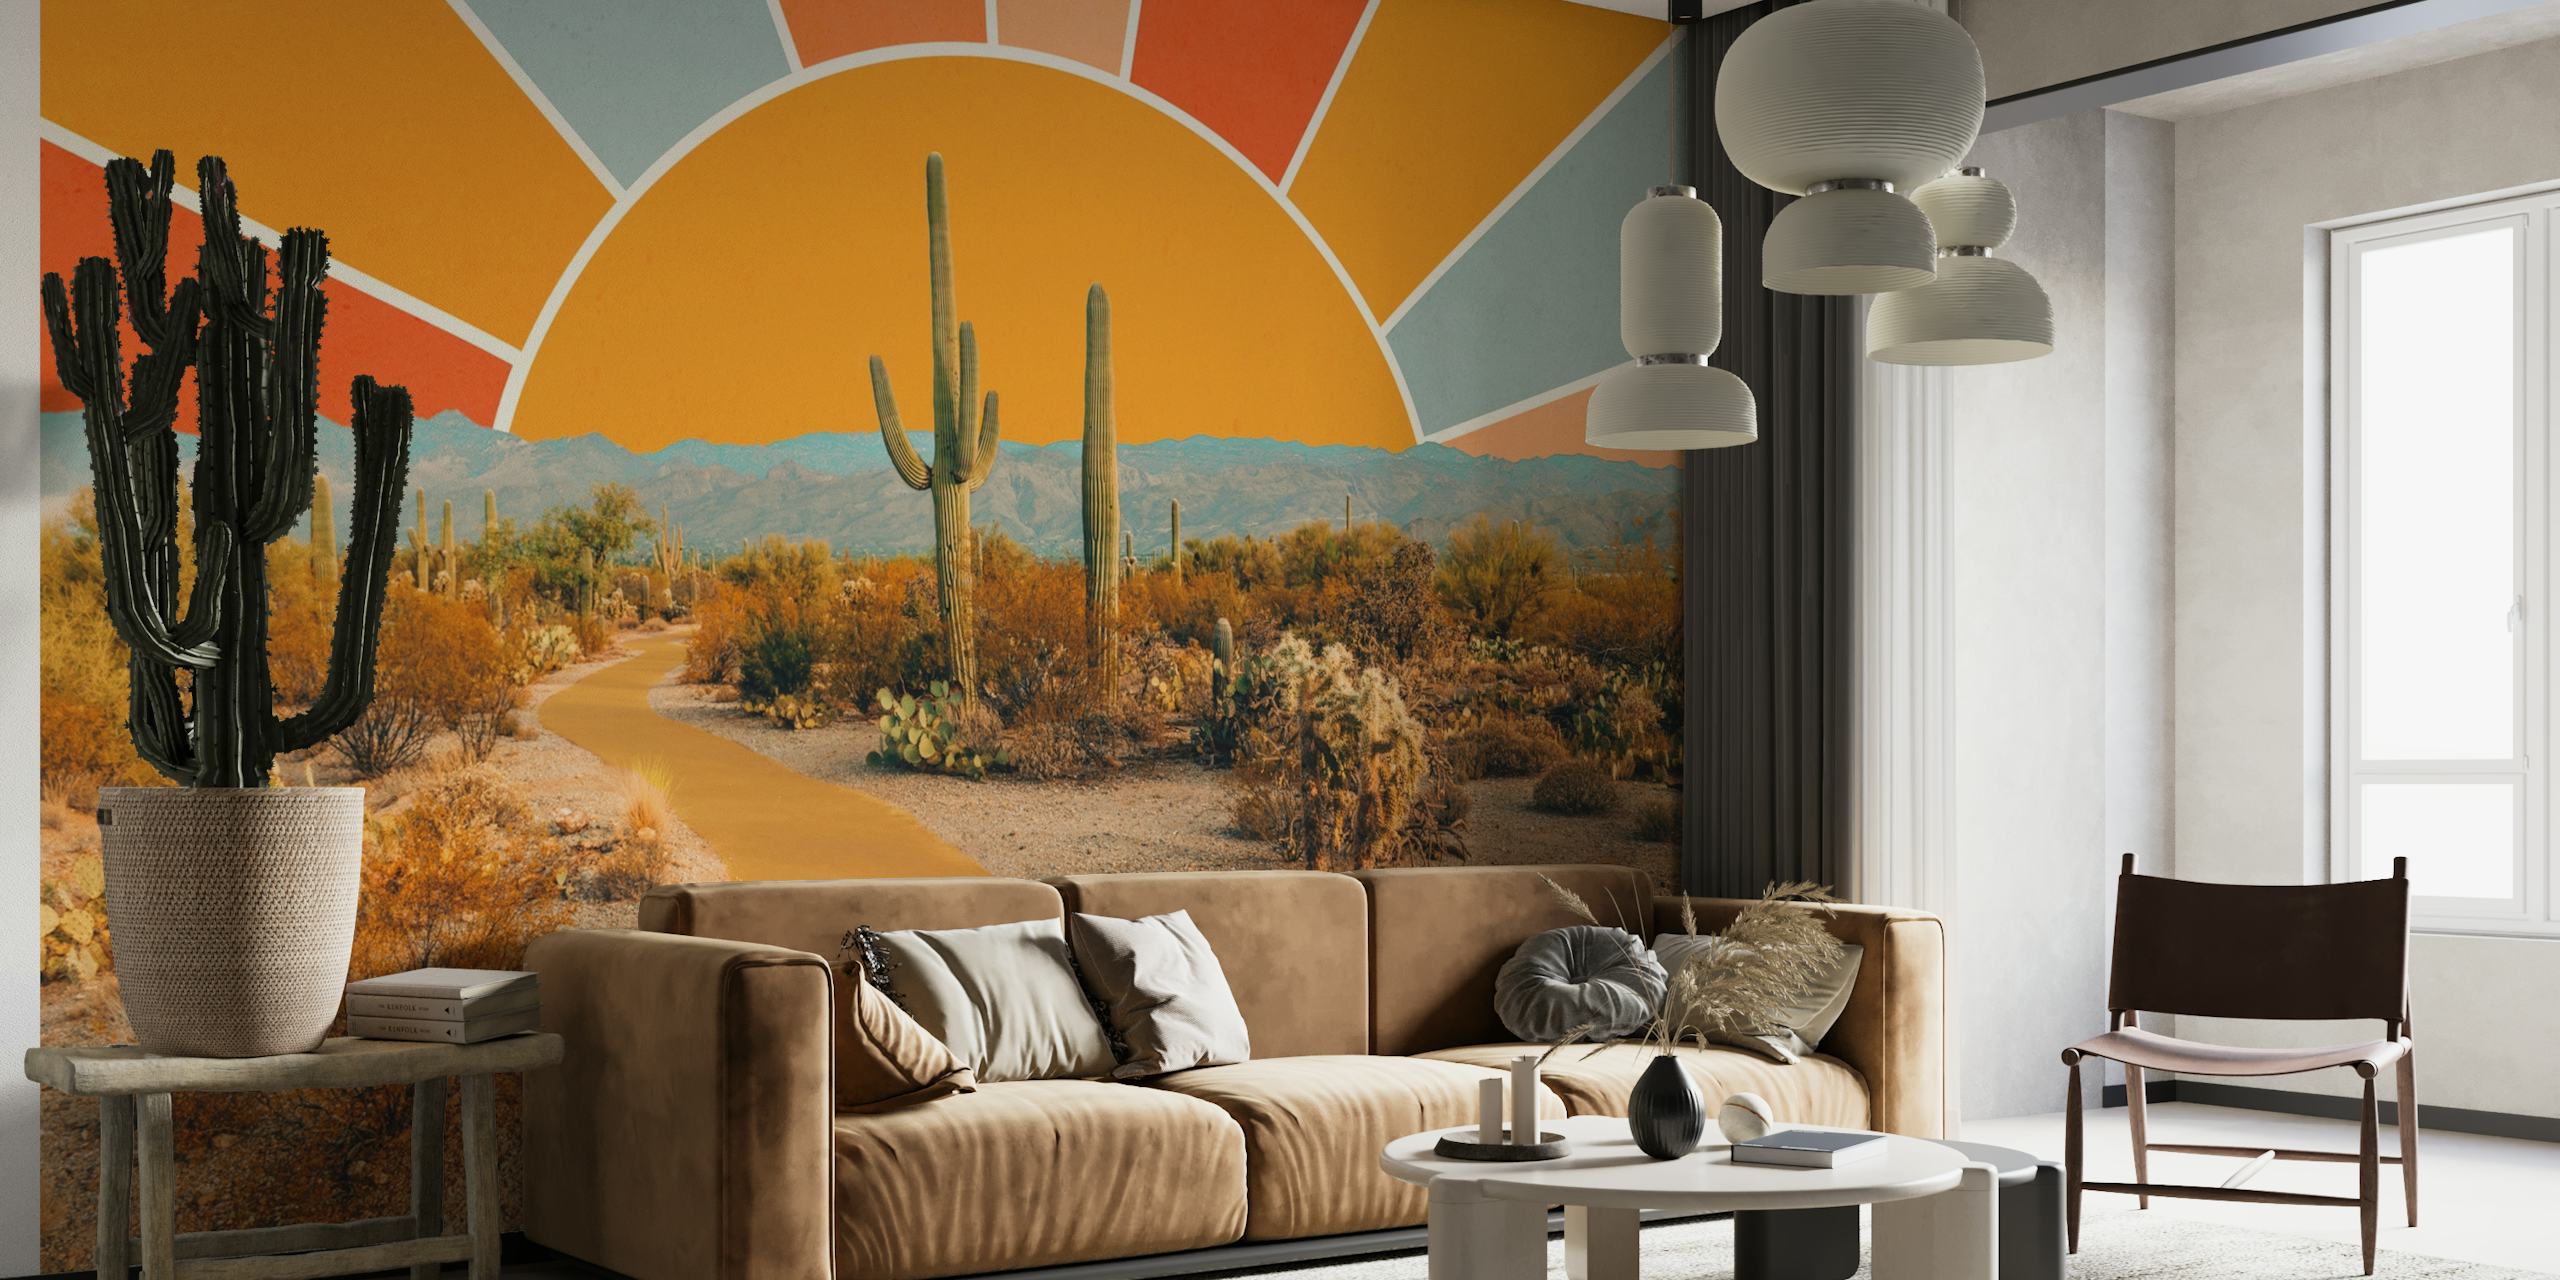 Kunstnerisk ørkenscene vægmaleri med kaktusser og varmt sunburst-design